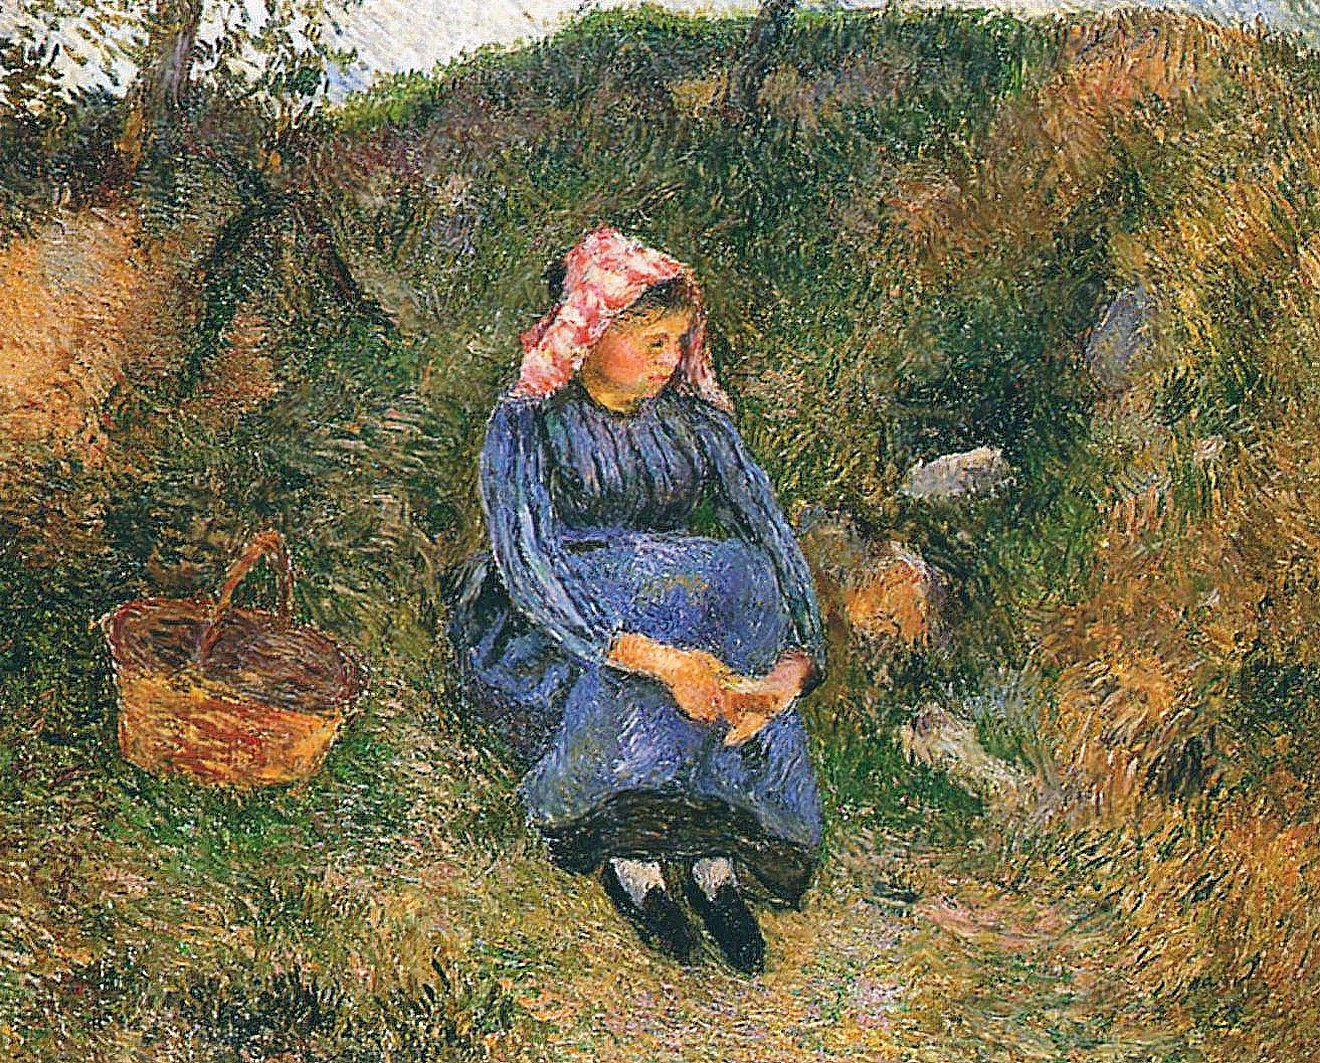 Camille+Pissarro-1830-1903 (317).jpg